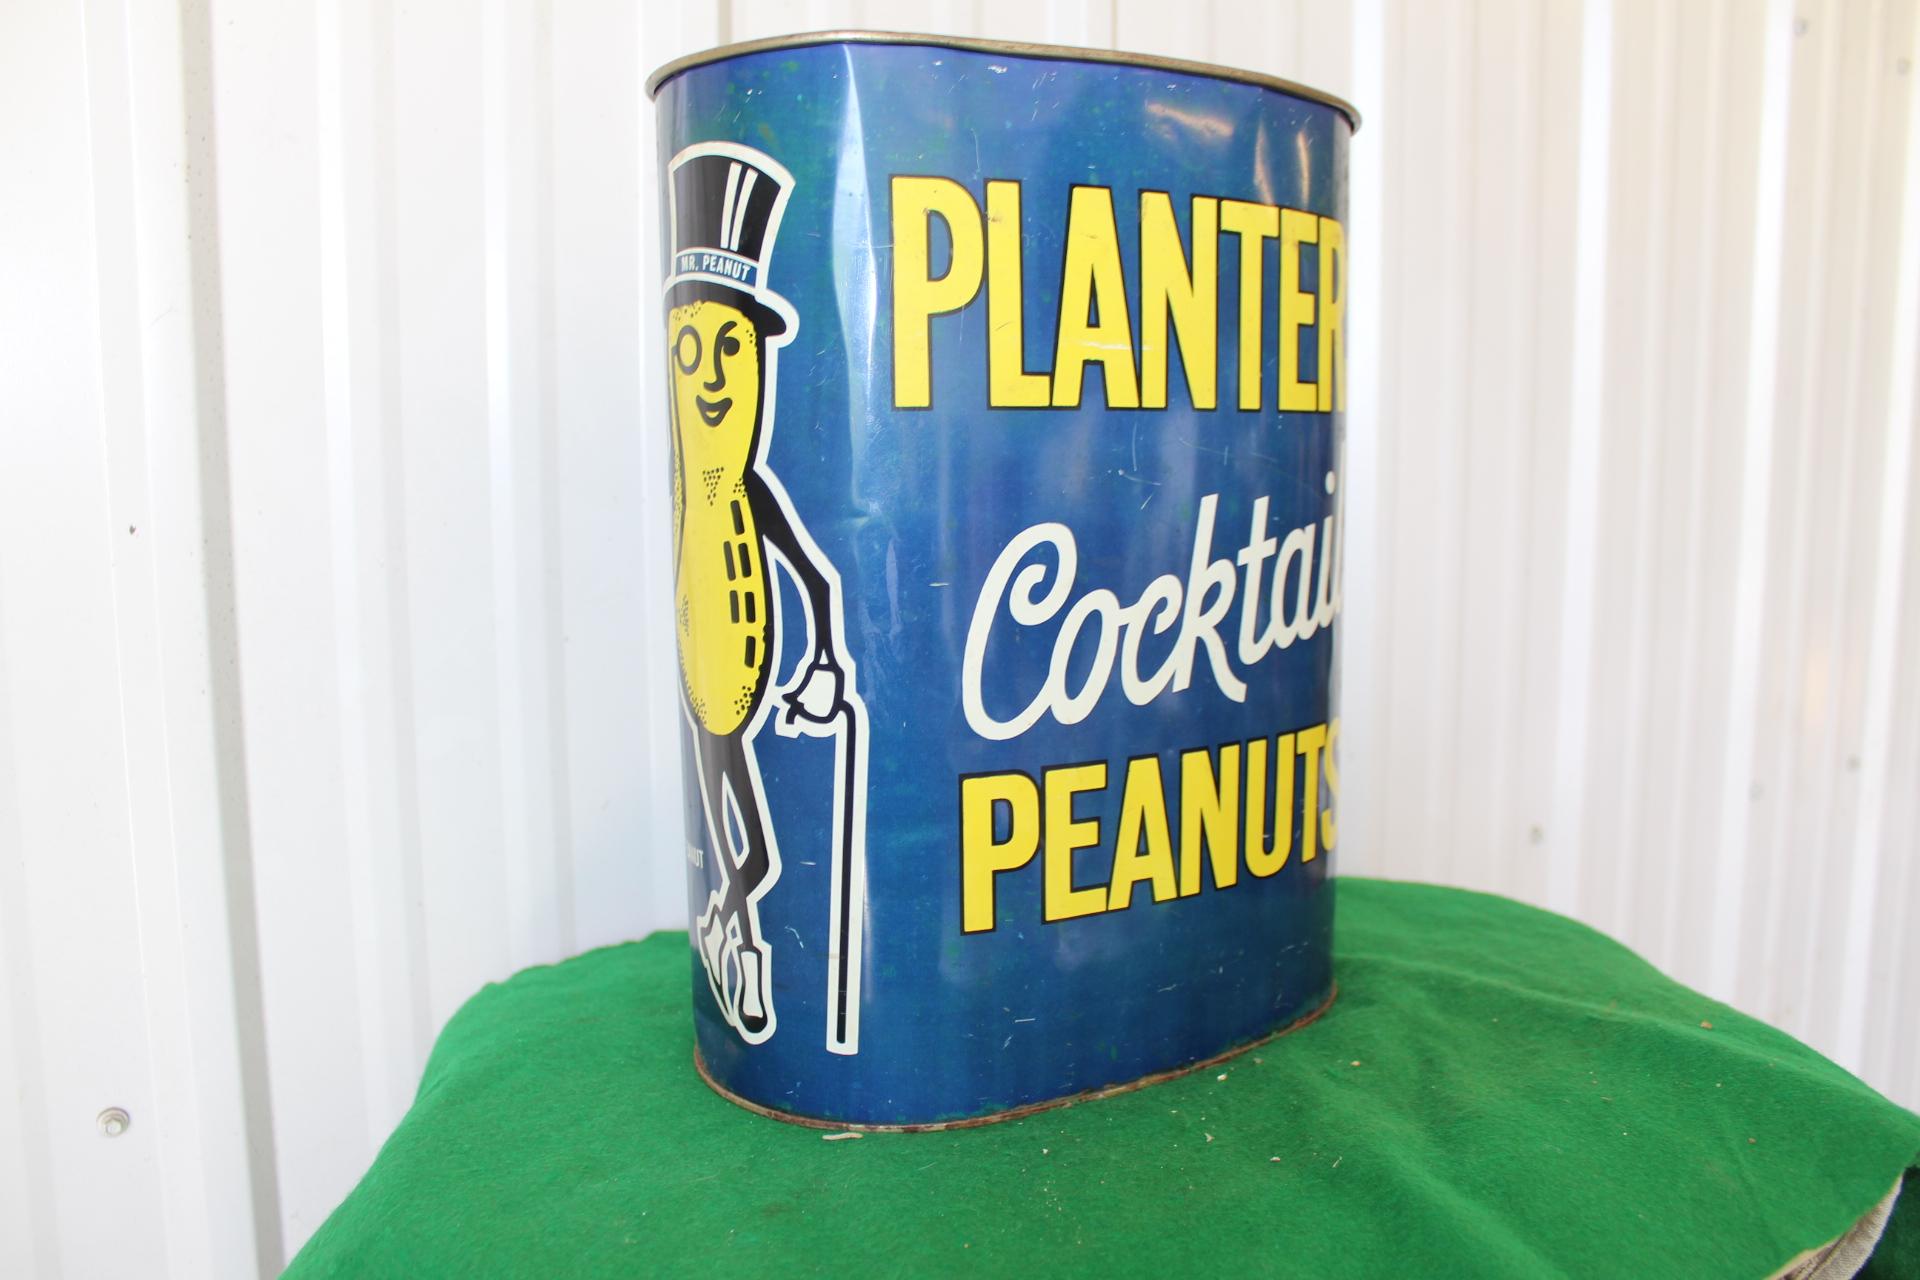 (2) Planters Peanuts stuffed toys inside tin